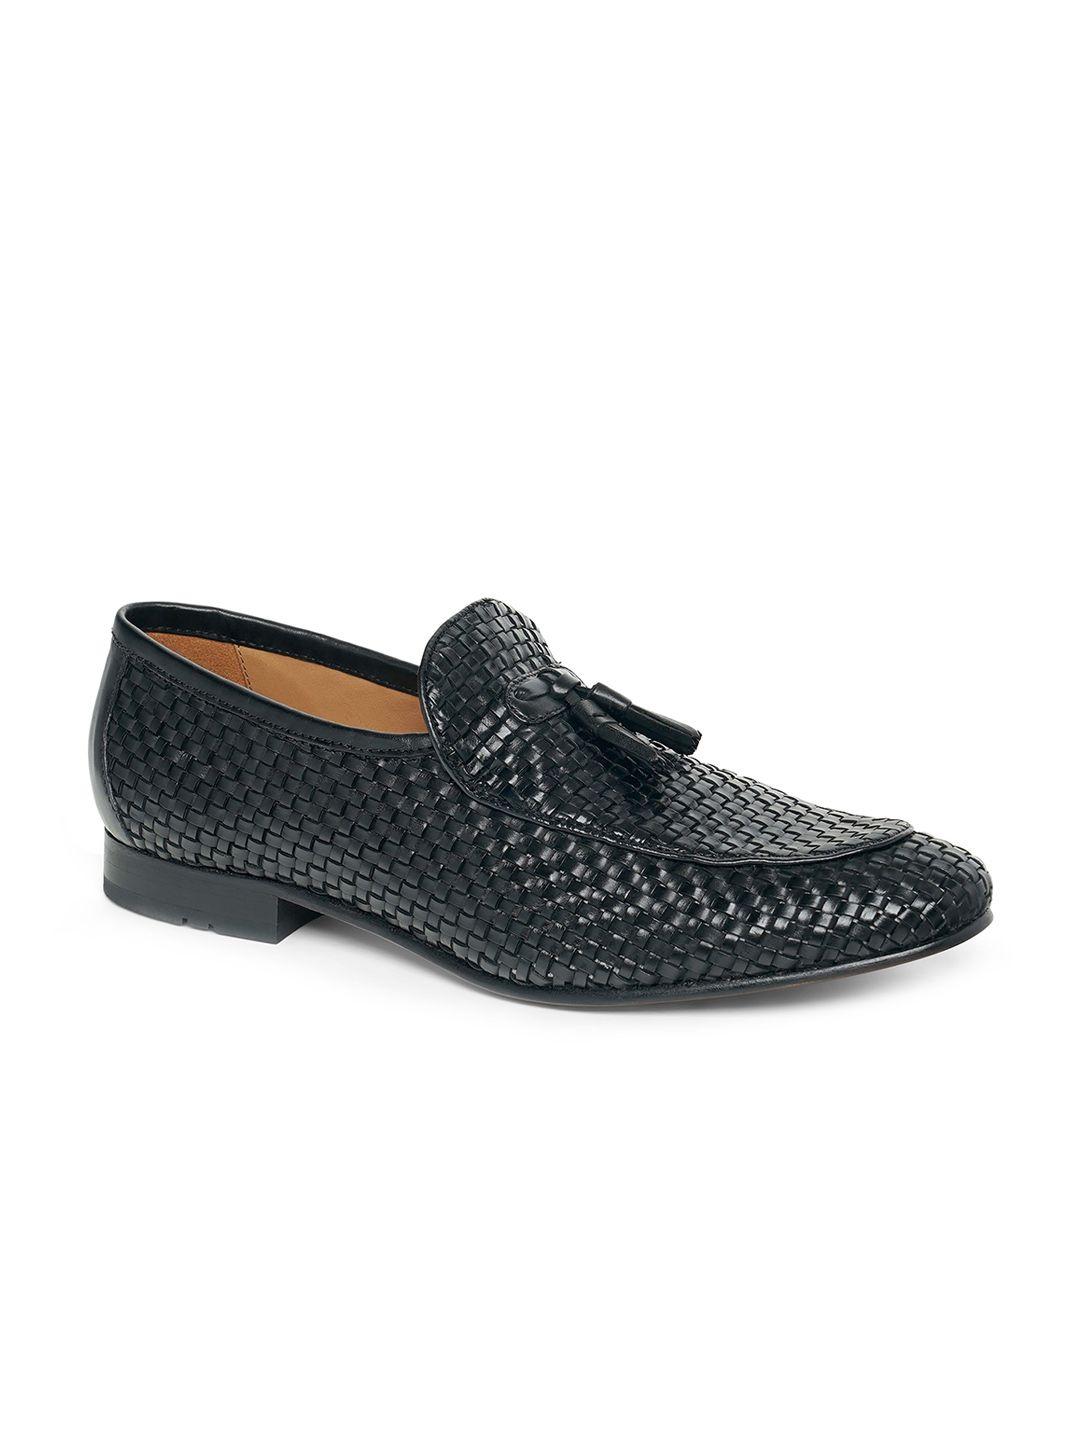 ruosh-men-textured-leather-tassel-loafers